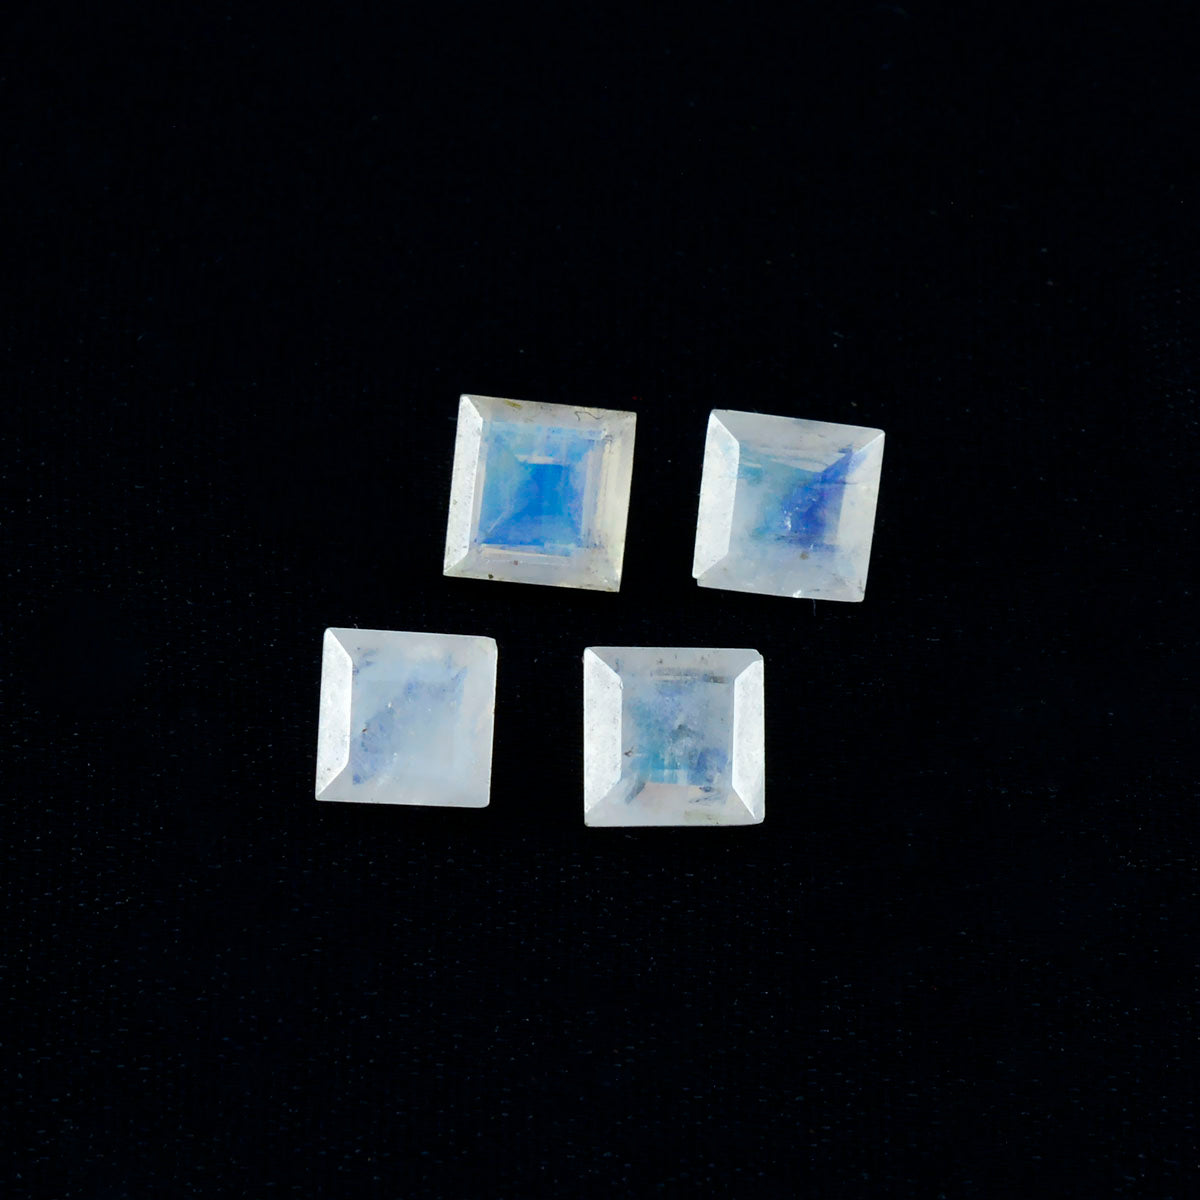 Riyogems 1PC White Rainbow Moonstone Faceted 10x10 mm Square Shape attractive Quality Gemstone